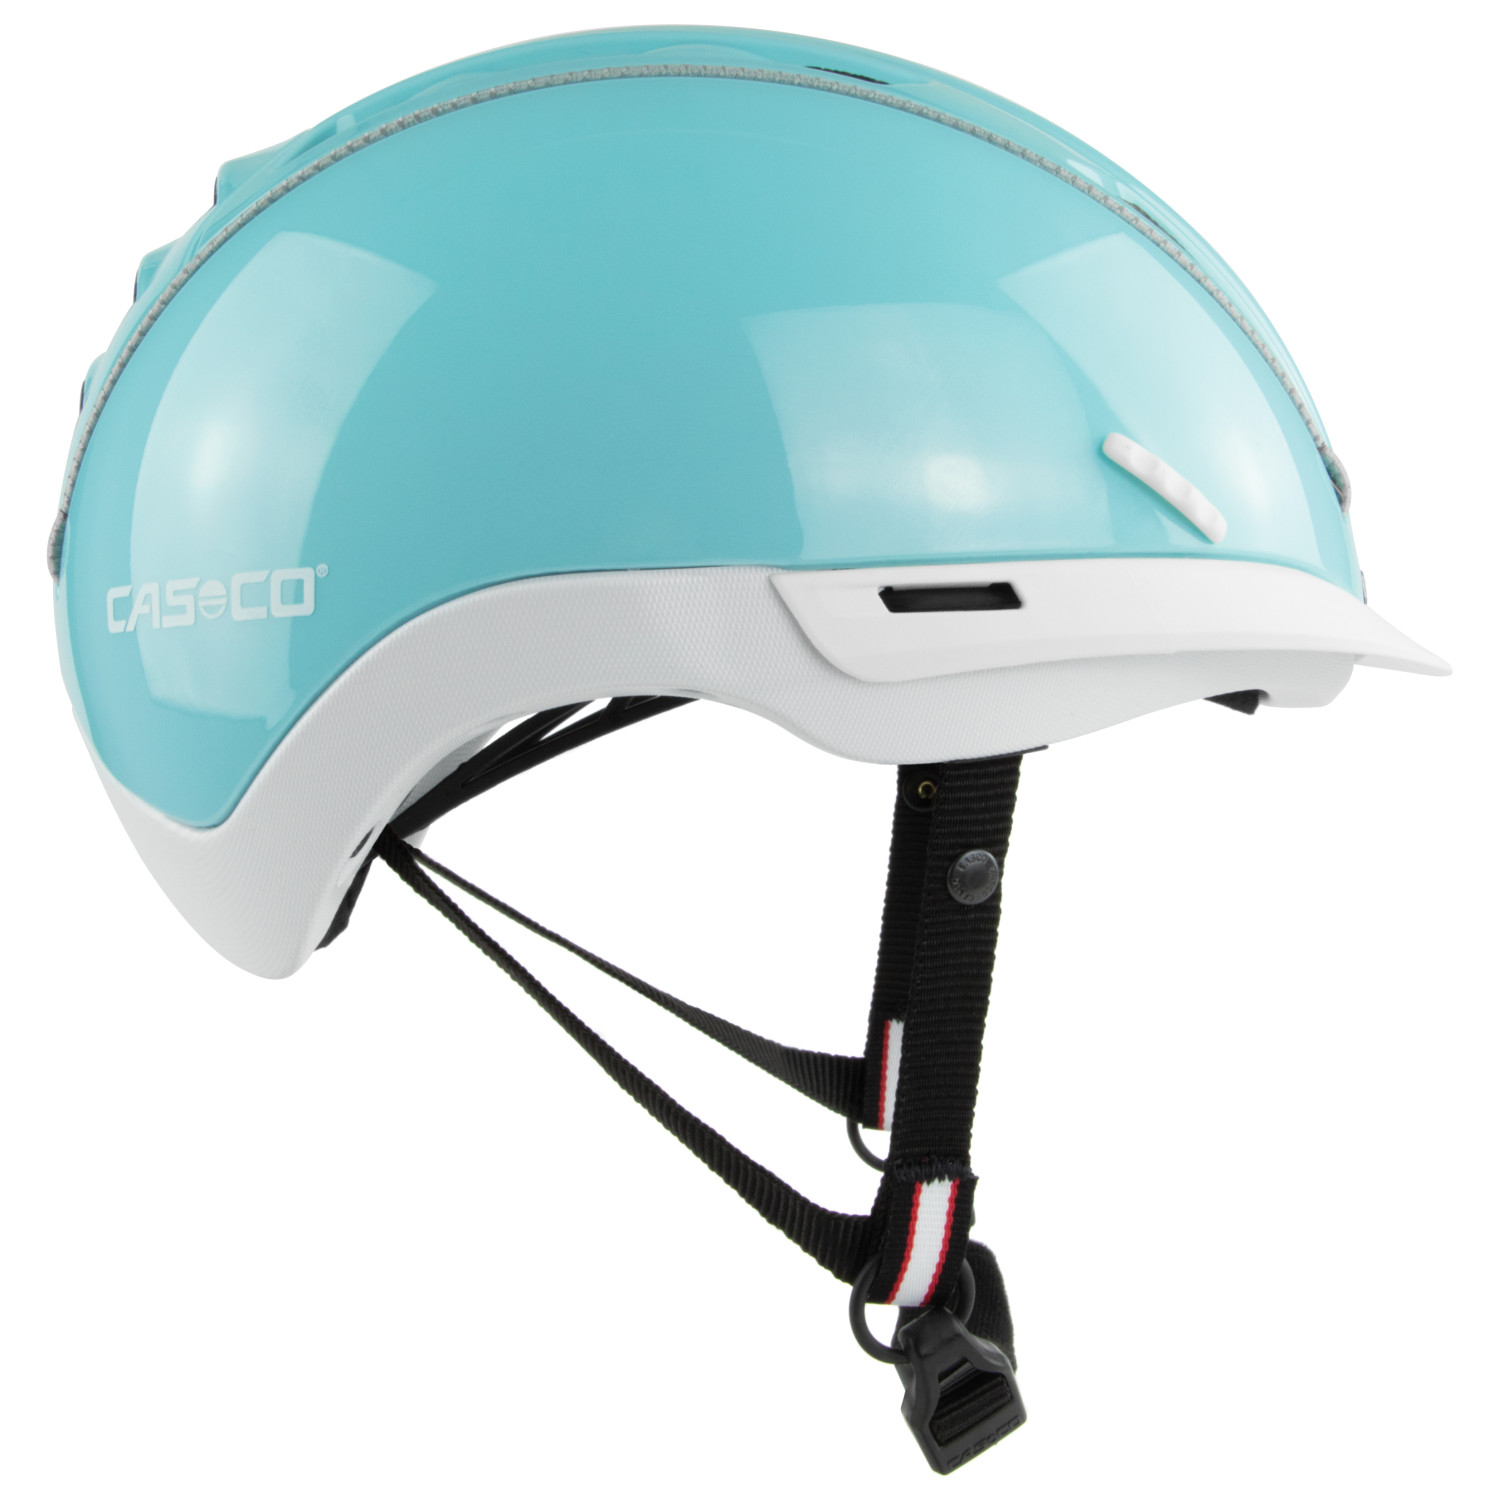 Велосипедный шлем Casco Roadster, цвет Light Blue/White